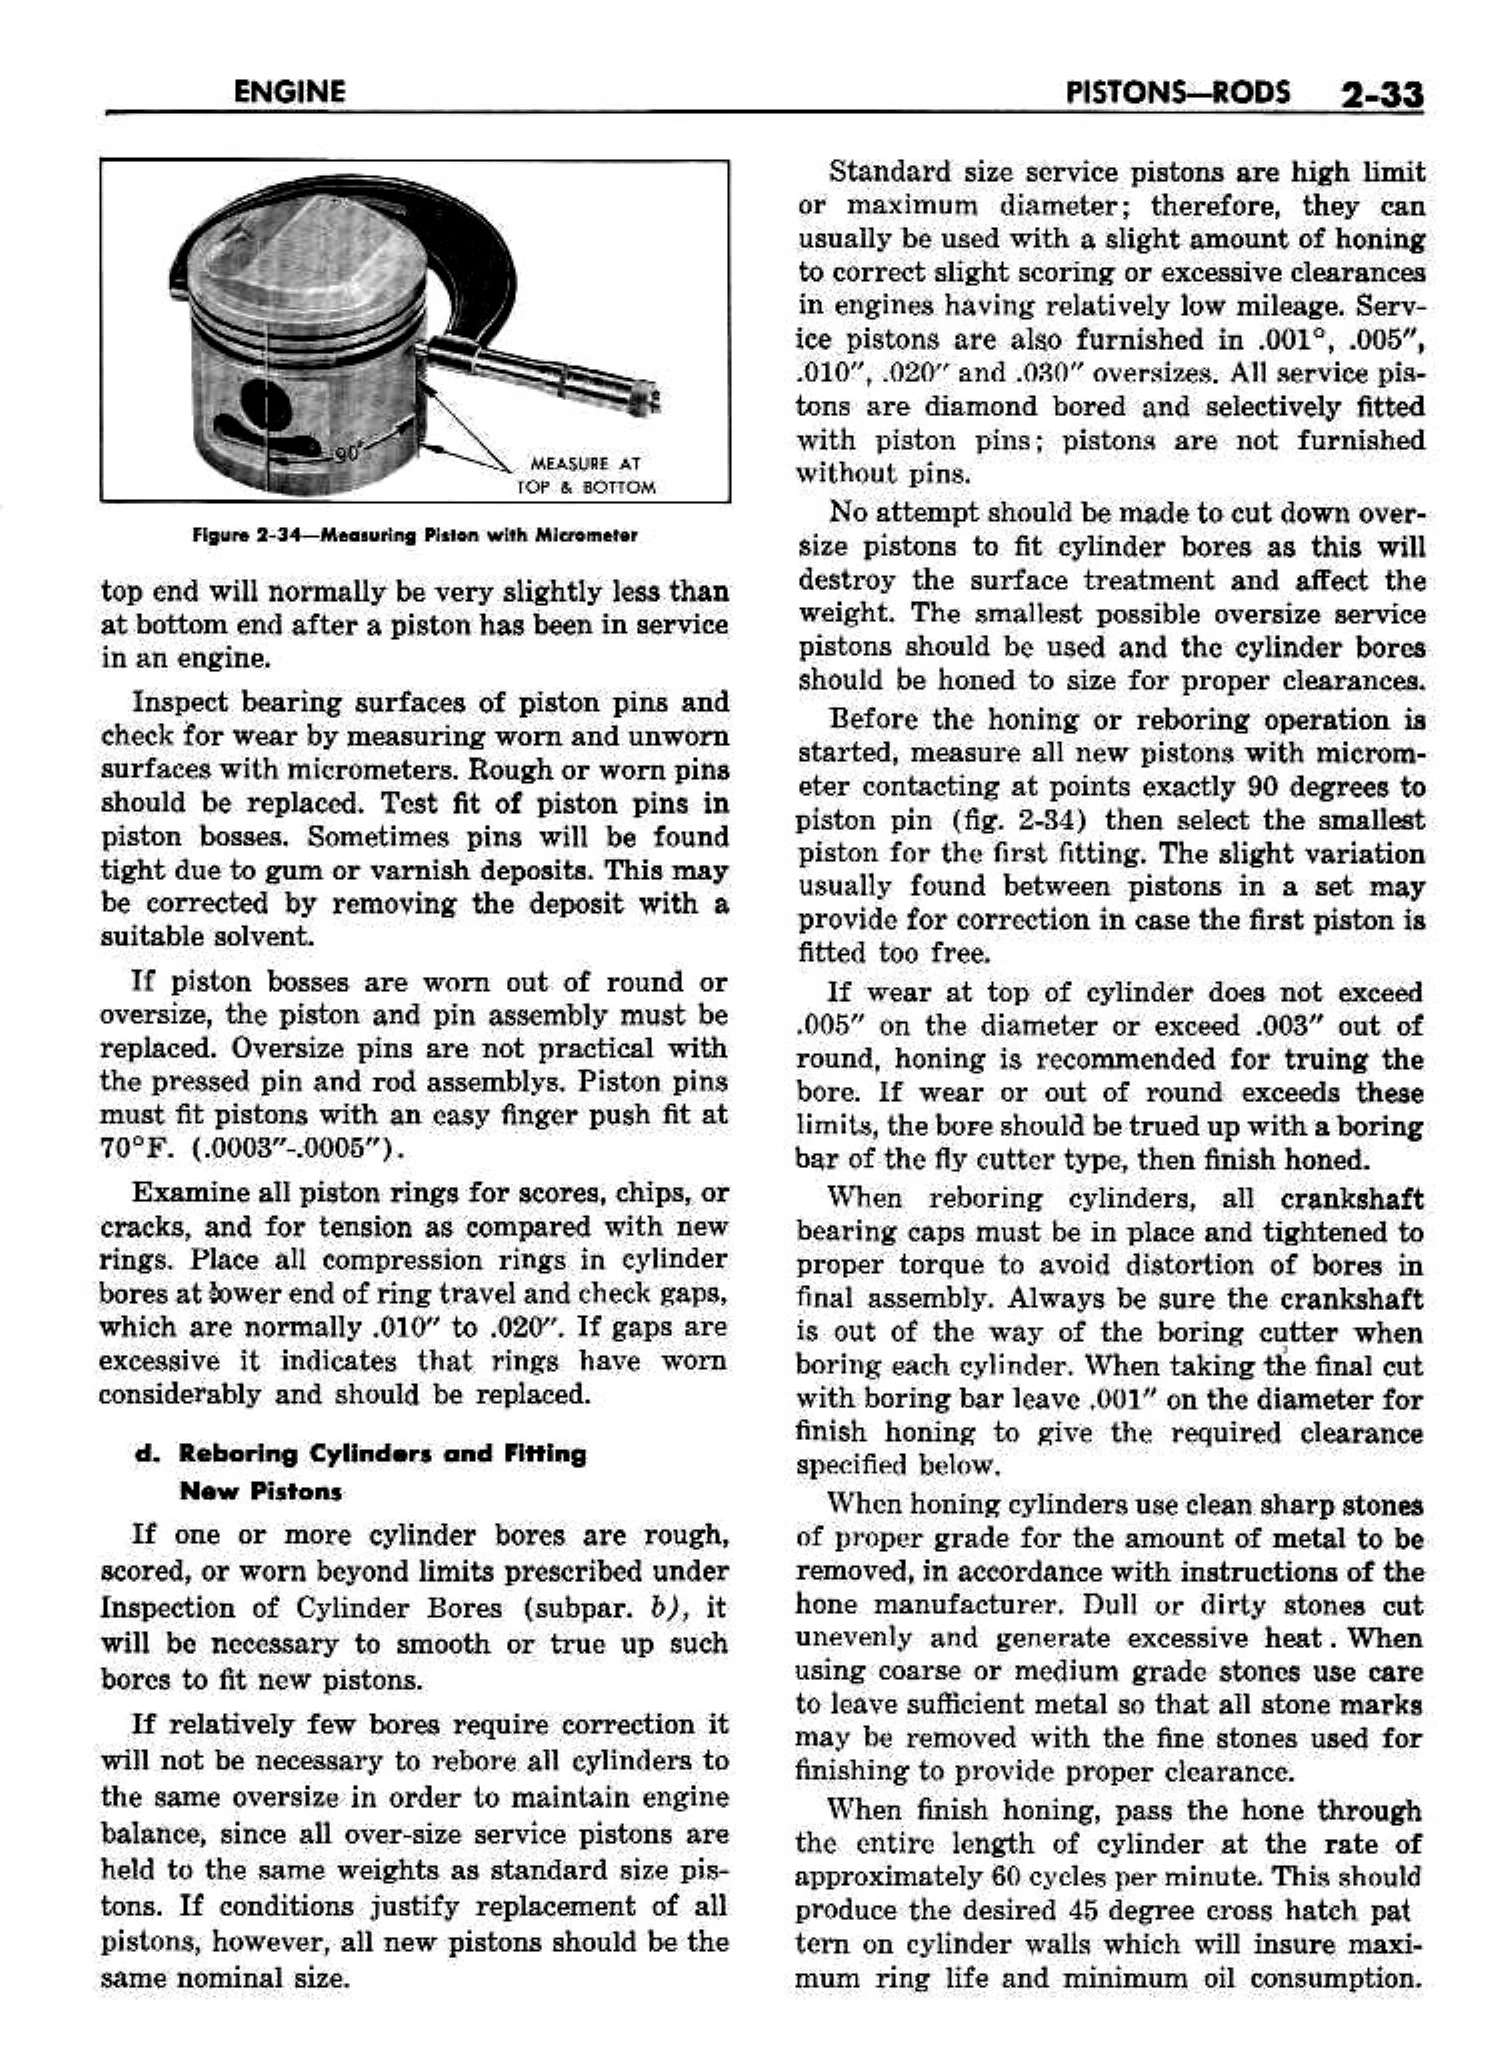 n_03 1958 Buick Shop Manual - Engine_33.jpg